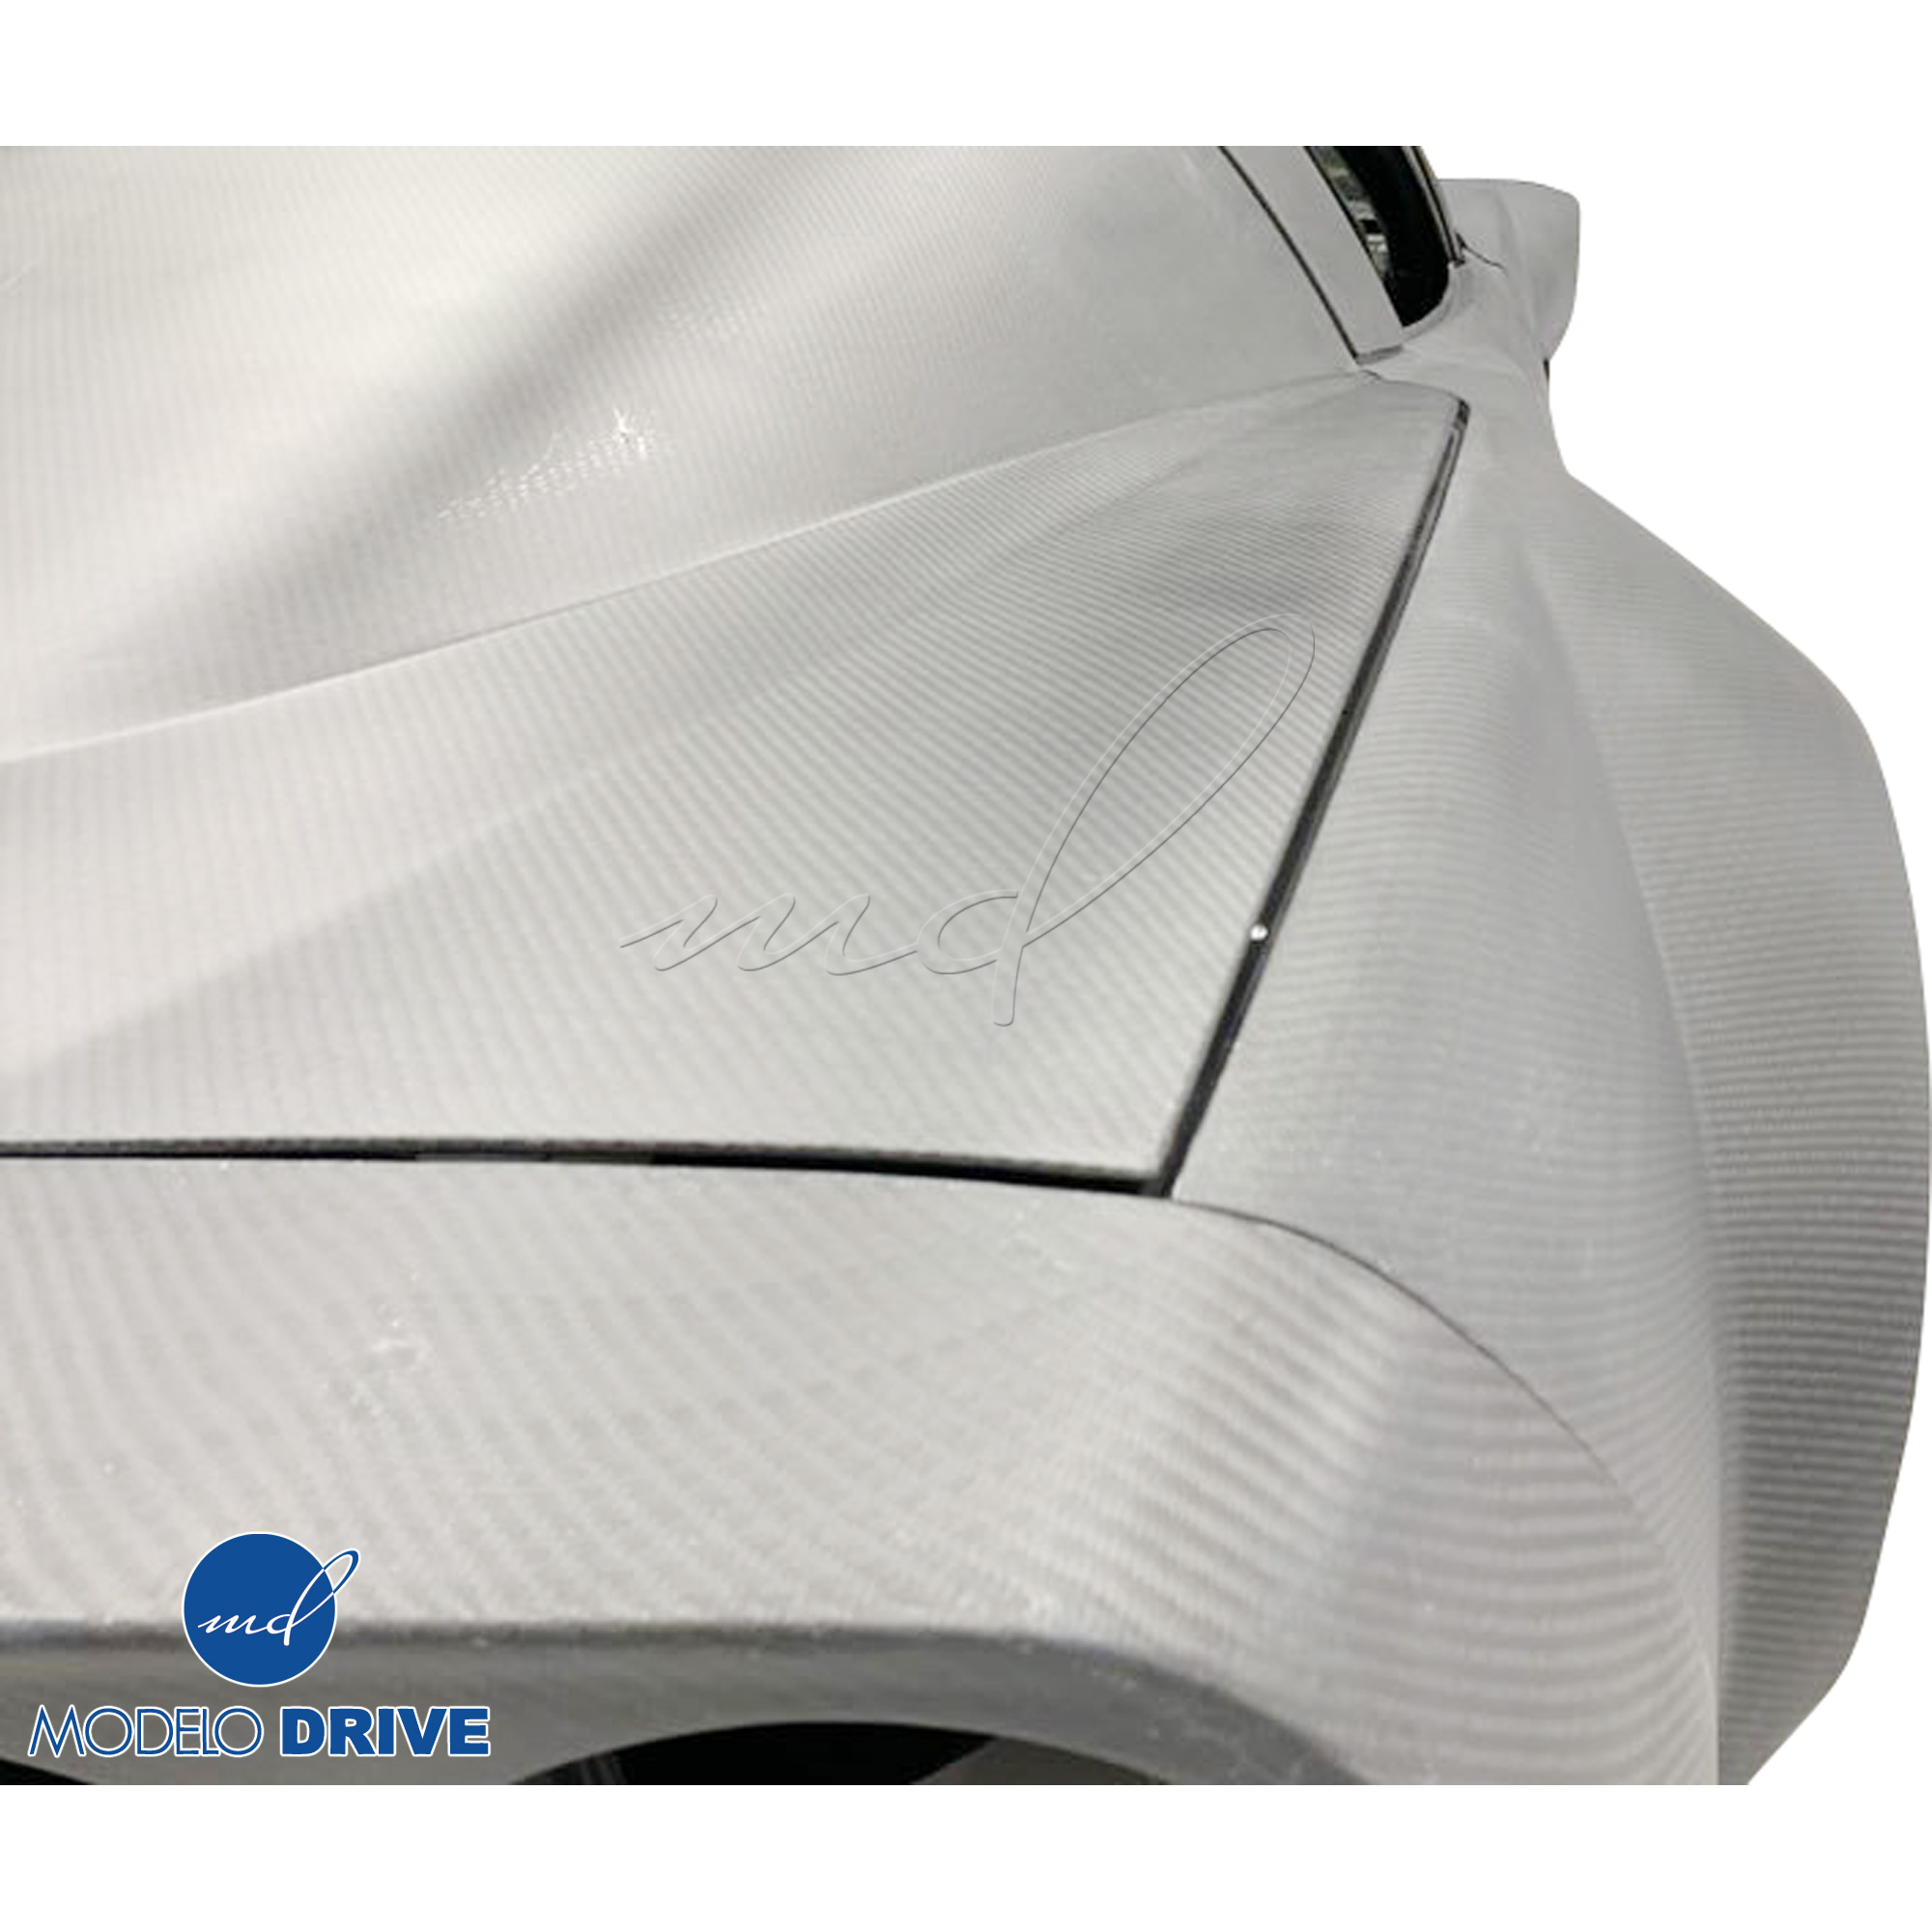 ModeloDrive Carbon Fiber GT3-XL Wide Body Fenders (rear) 2pc > Chevrolet Corvette C6 2005-2013 - Image 1